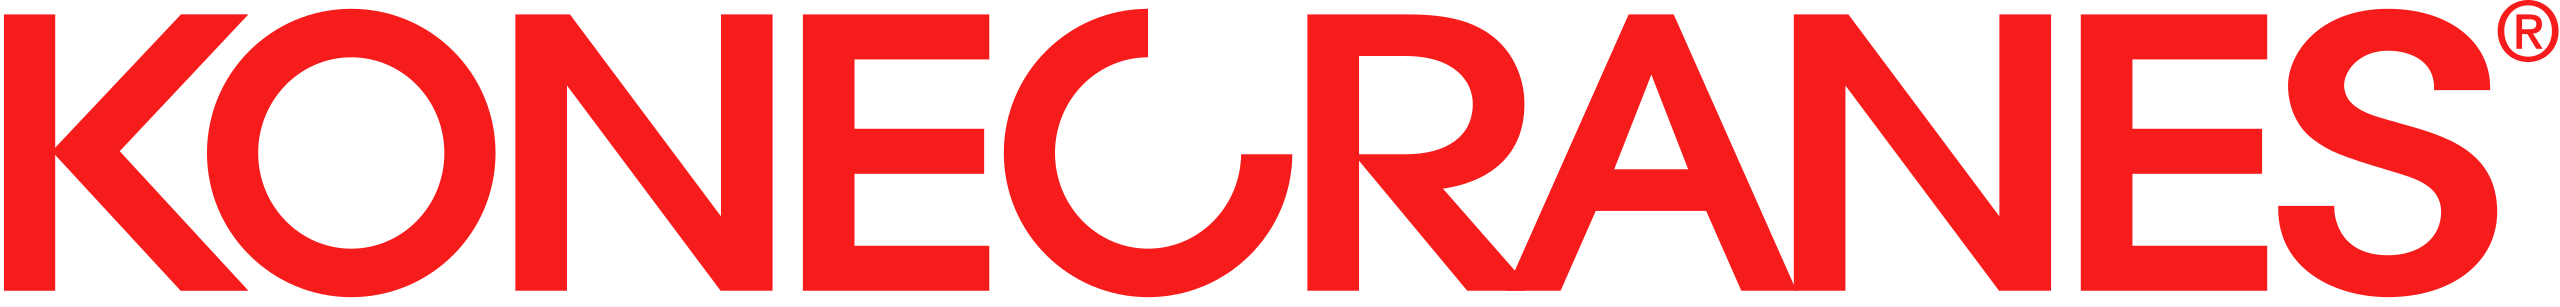 Konecranes-logo